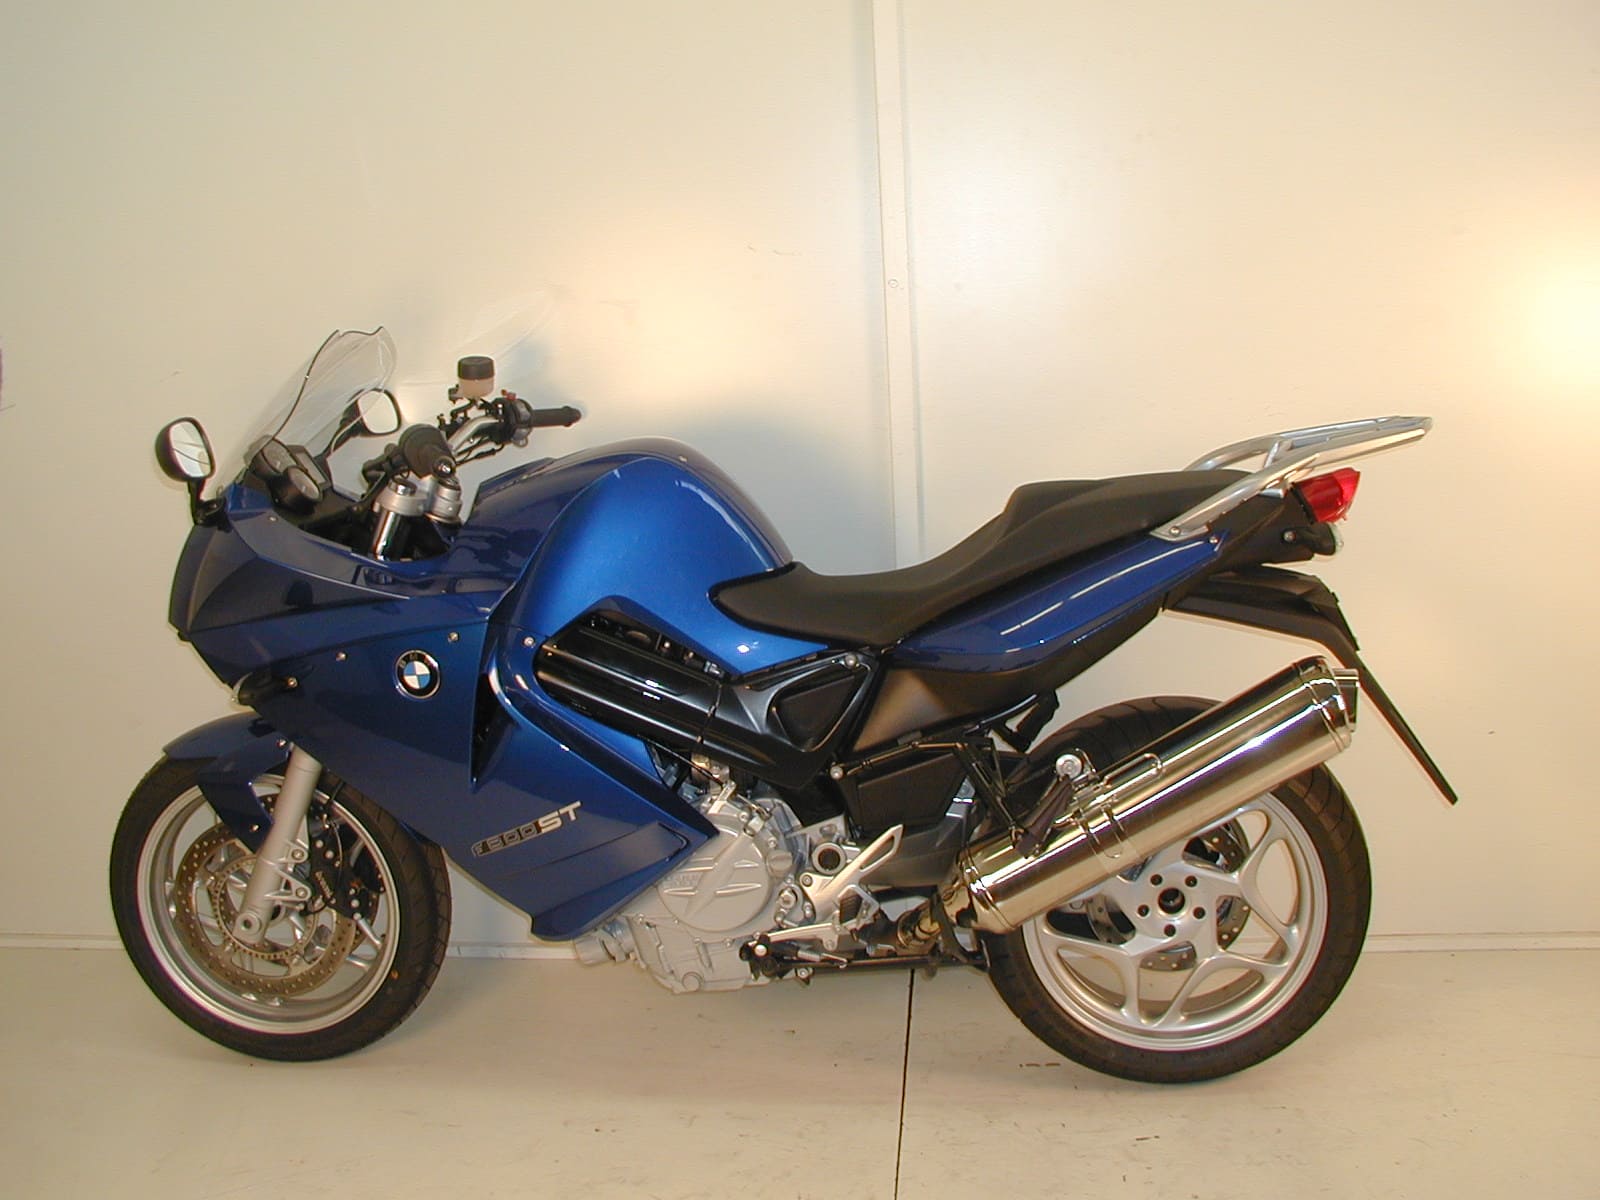 Farbe : Blau YXSM Motorrad-Lenkerenden Aluminium-Lenkergriffkappen 7/822 Mm Symmetrischer Stecker Für BMW F800ST F 800 ST 2006-2010 2011 2012 2013 2014 2015 